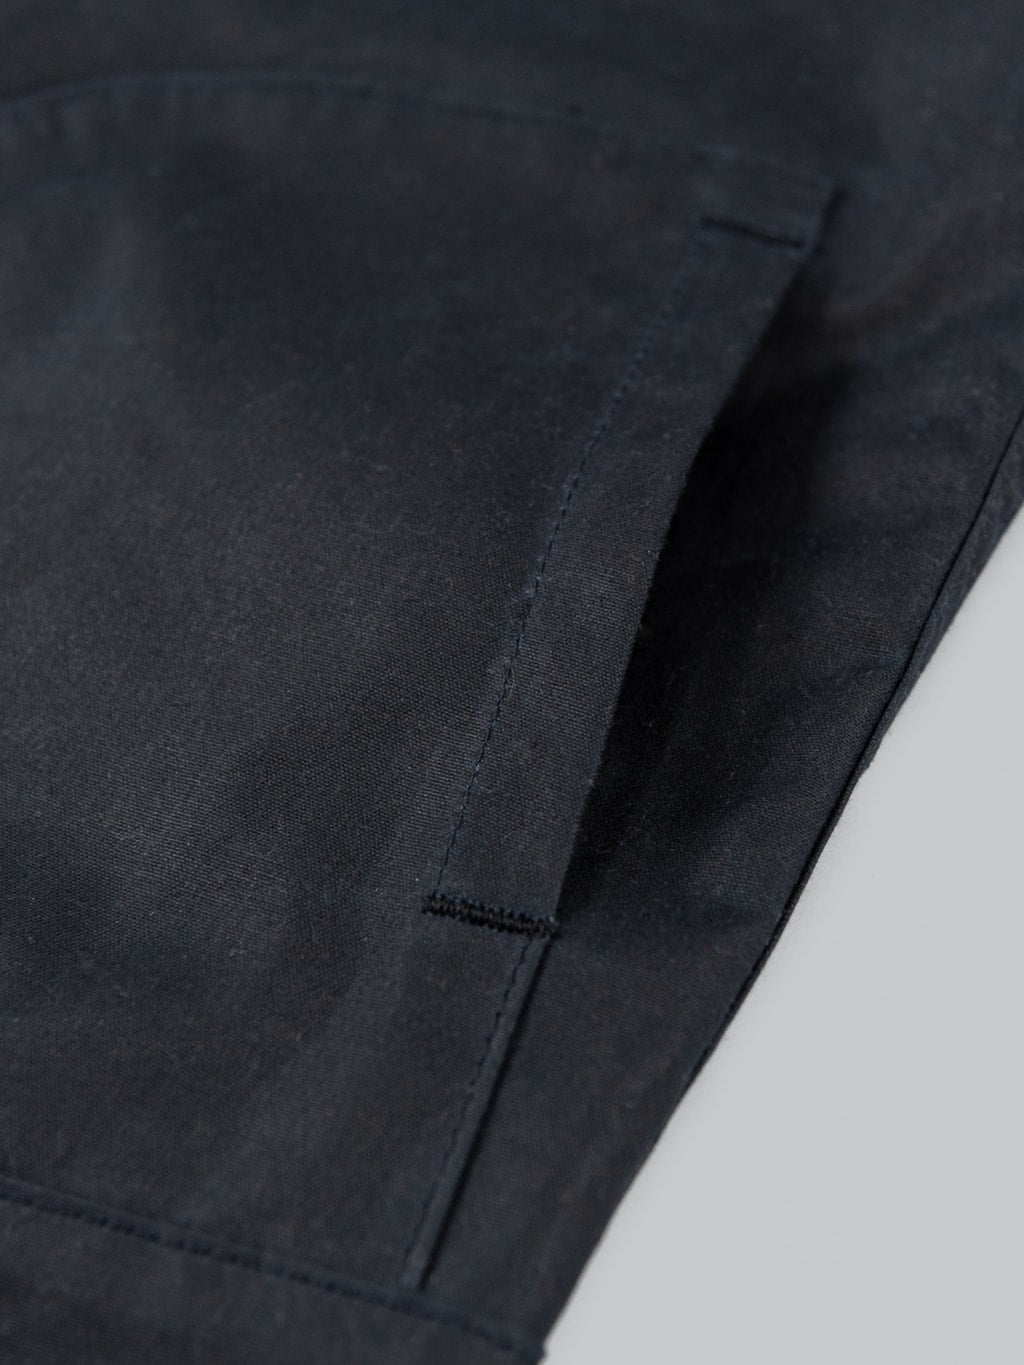 rogue territory lined waxed canvas supply vest 8.25oz black pocket closeup